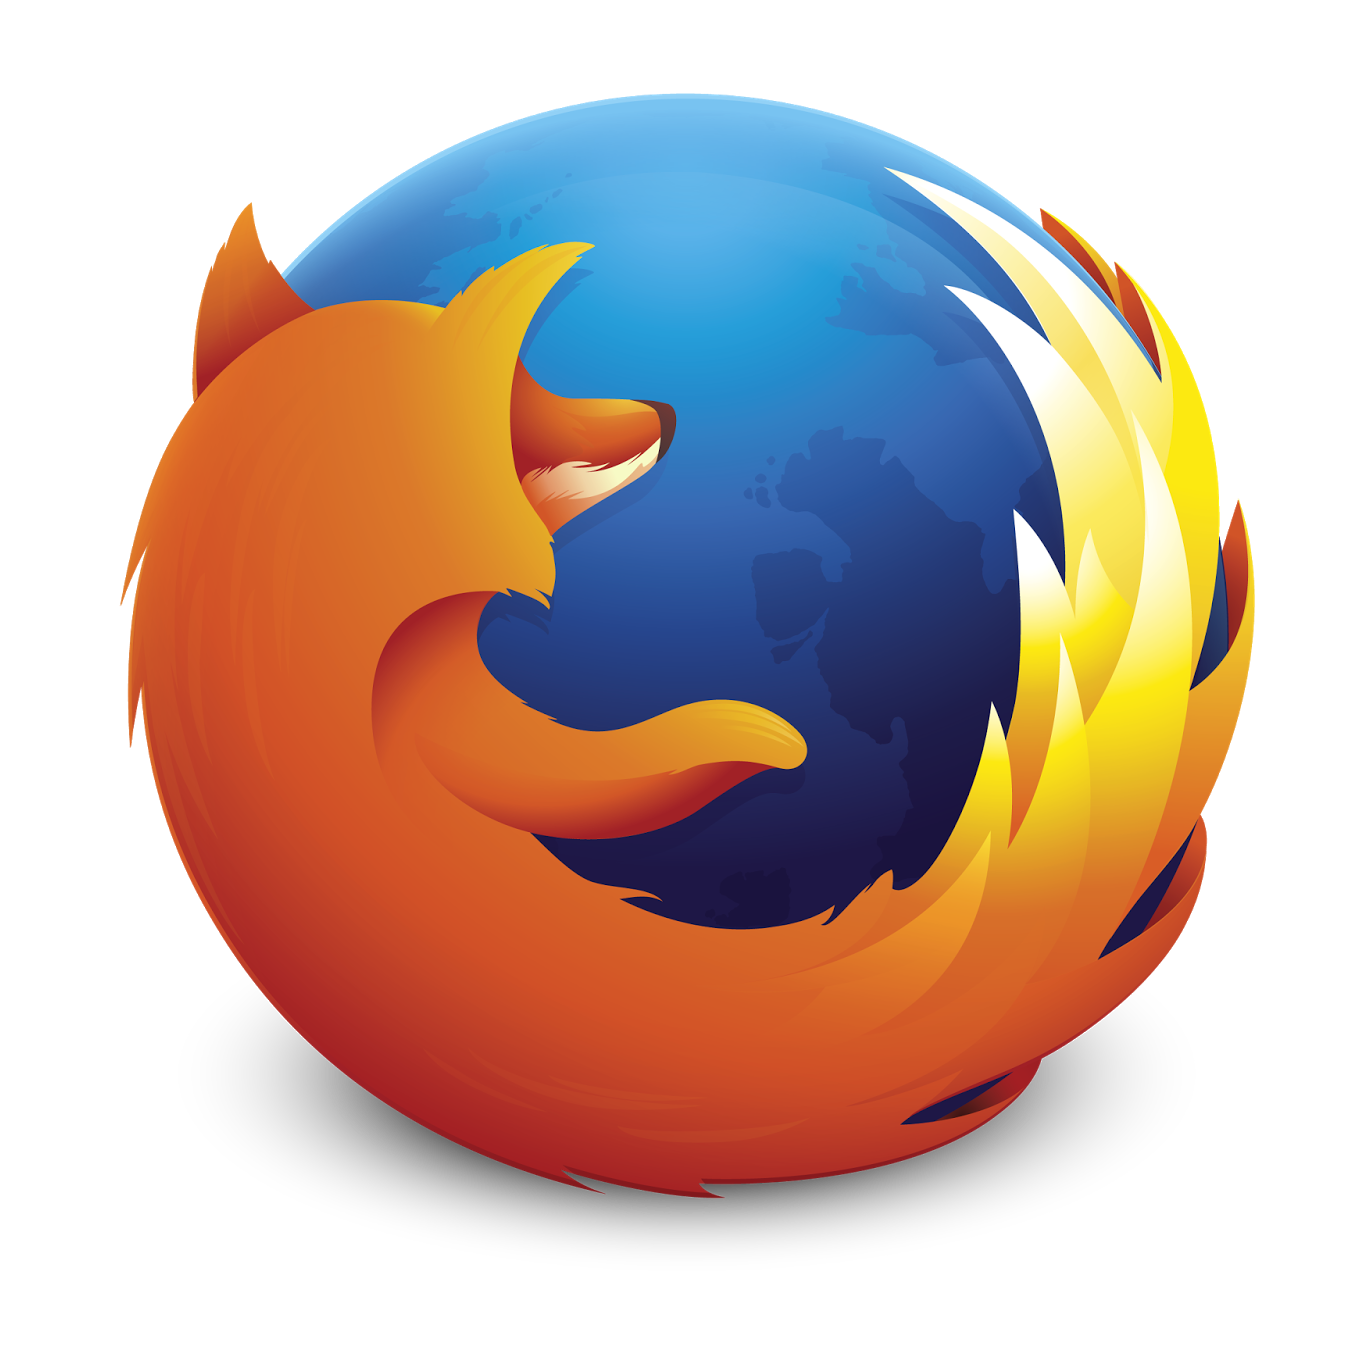 [Software] Mozilla Firefox เว็บบราว์เซอร์ ที่ดีที่สุด ก็ว่าได้ รายละเอียดด้านใน... Photo